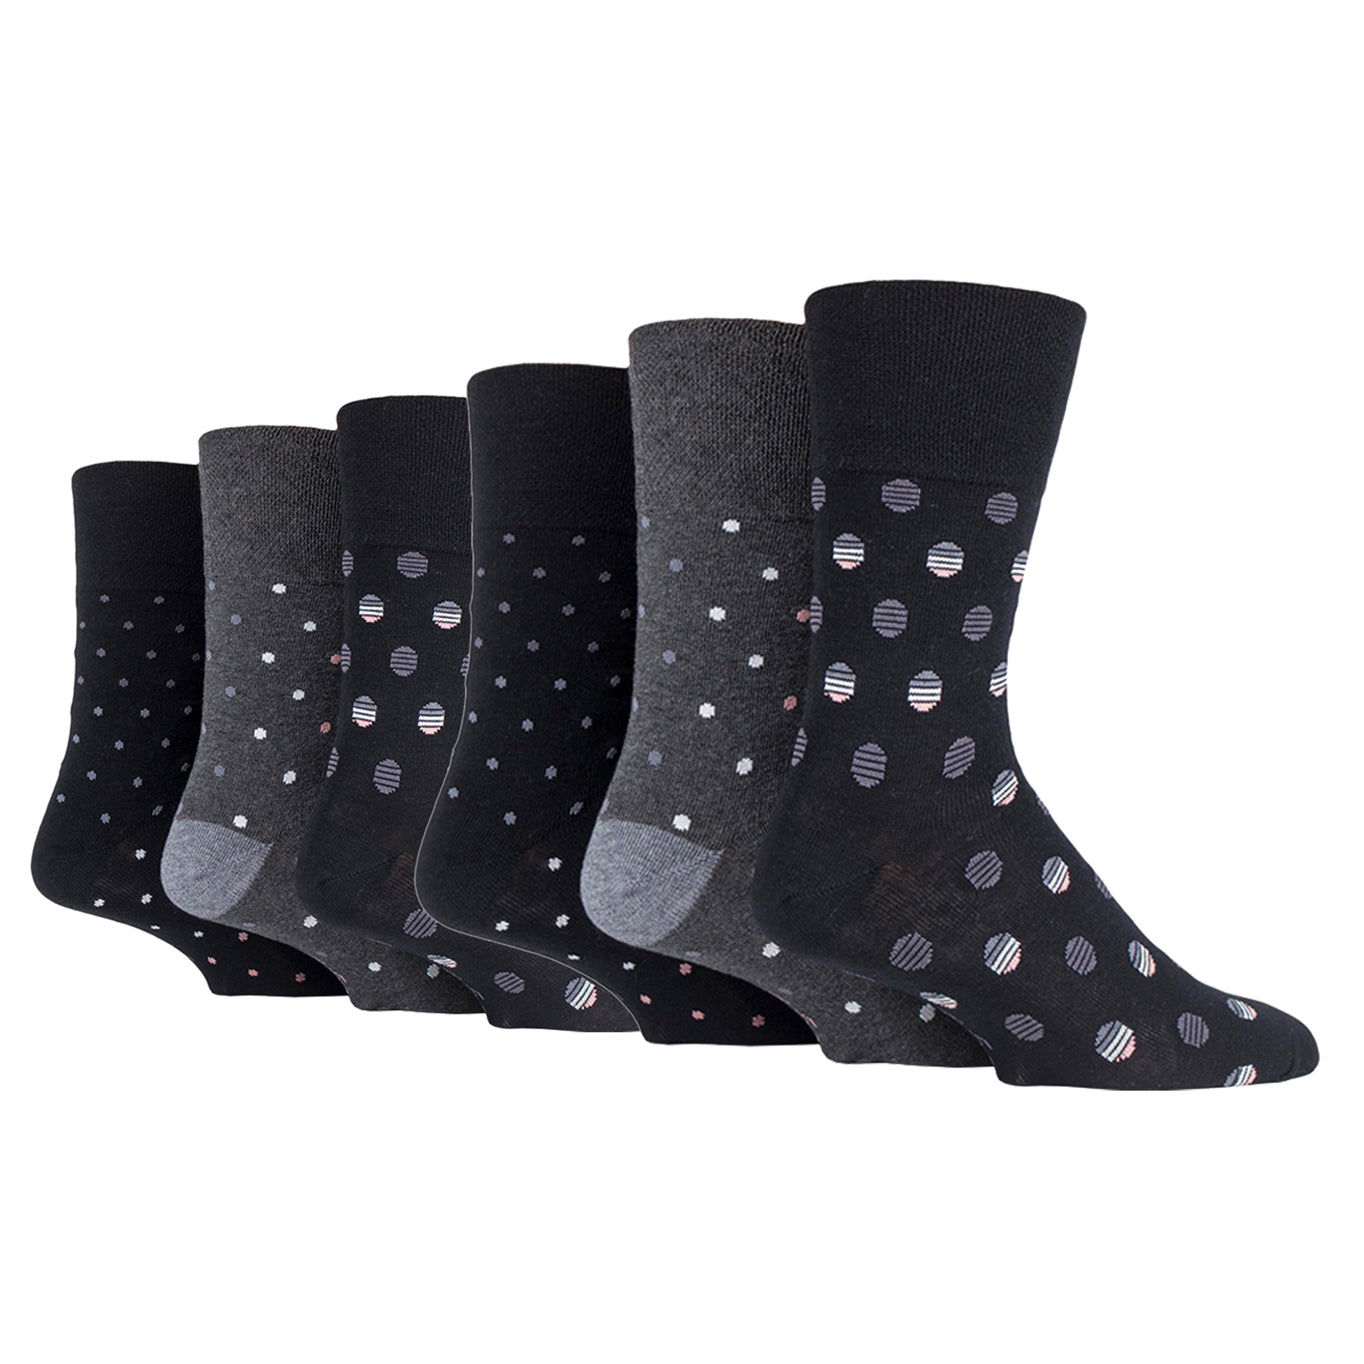 6 Pairs Ladies Plus Size 6-11 Gentle Grip Cotton Socks Polka Pop Black/Charcoal